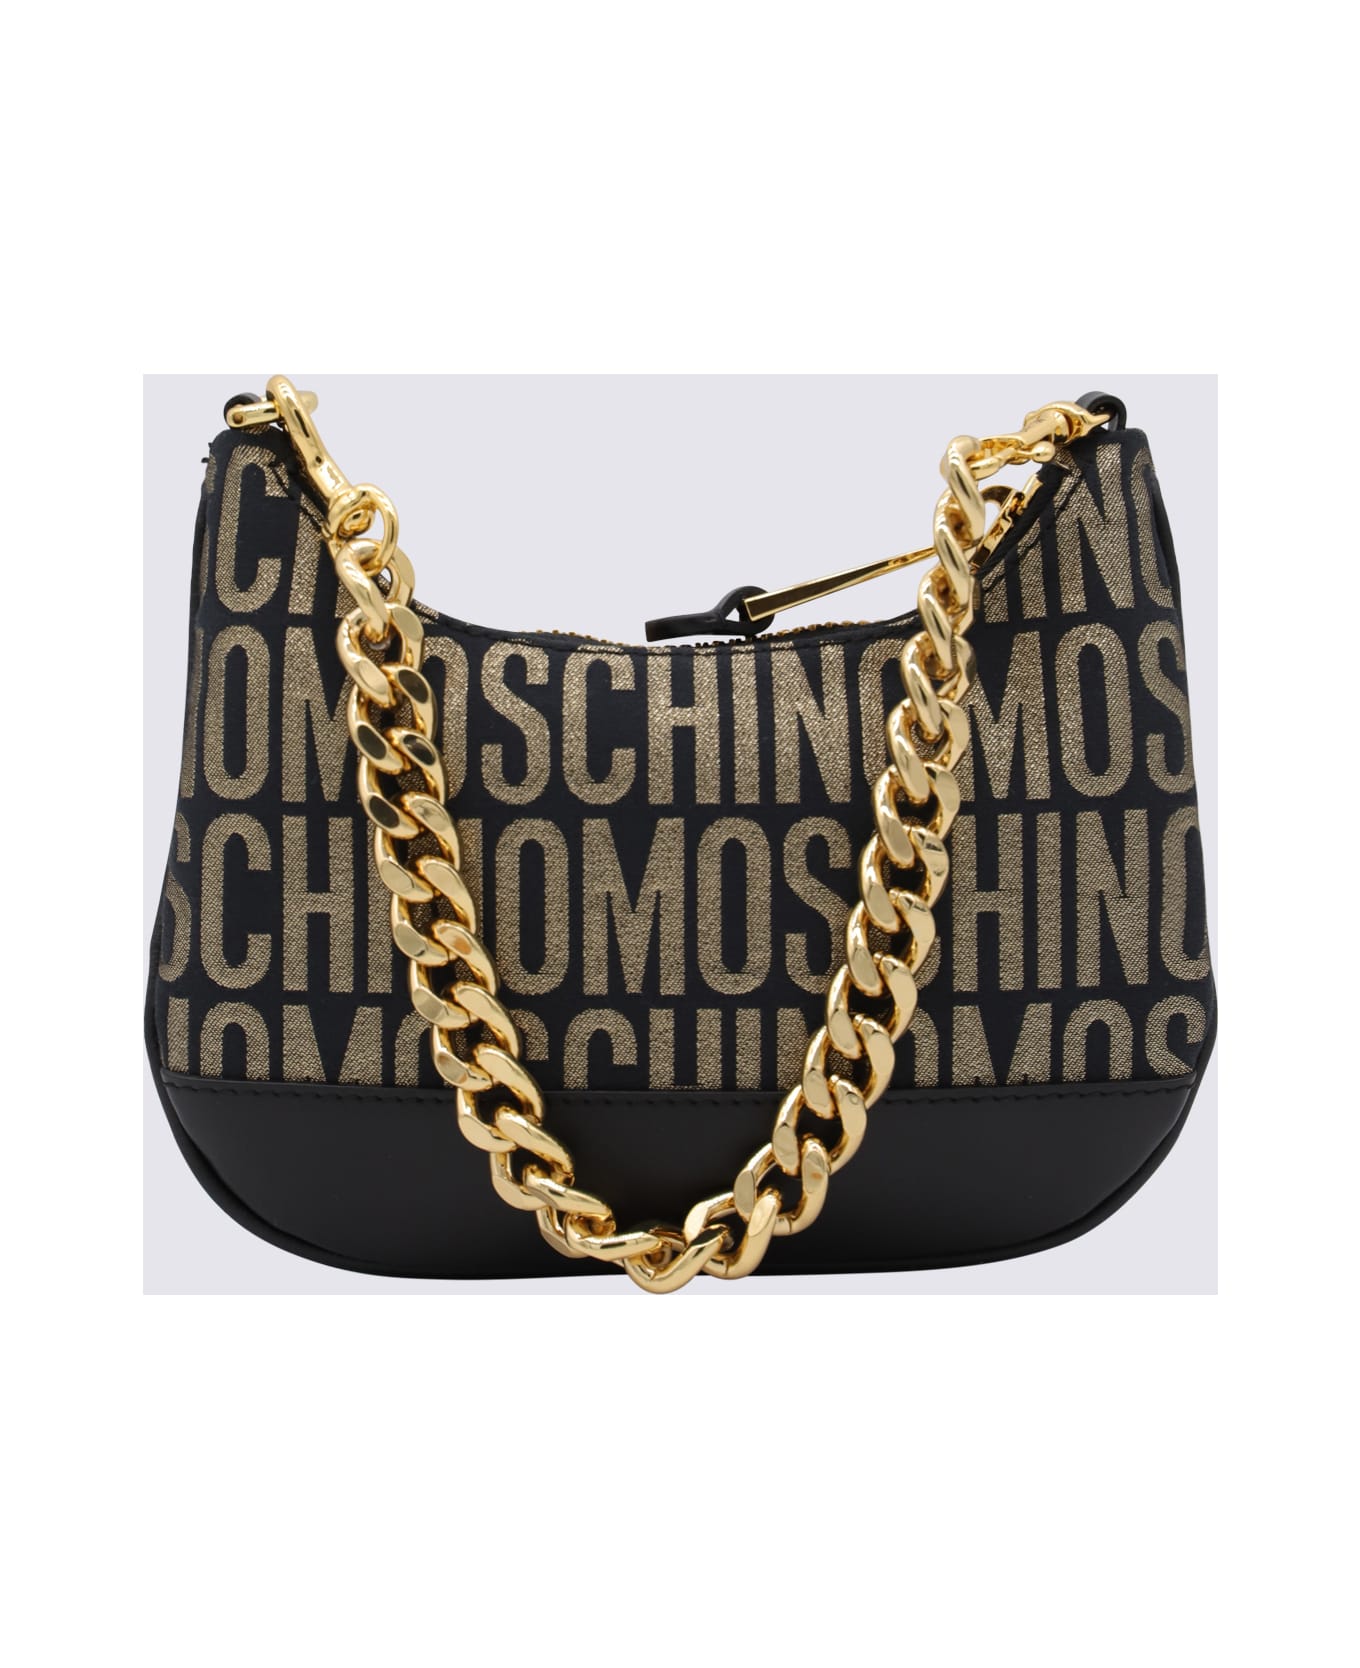 Moschino Black And Gold Allover Medium Crossbody Bag - Black